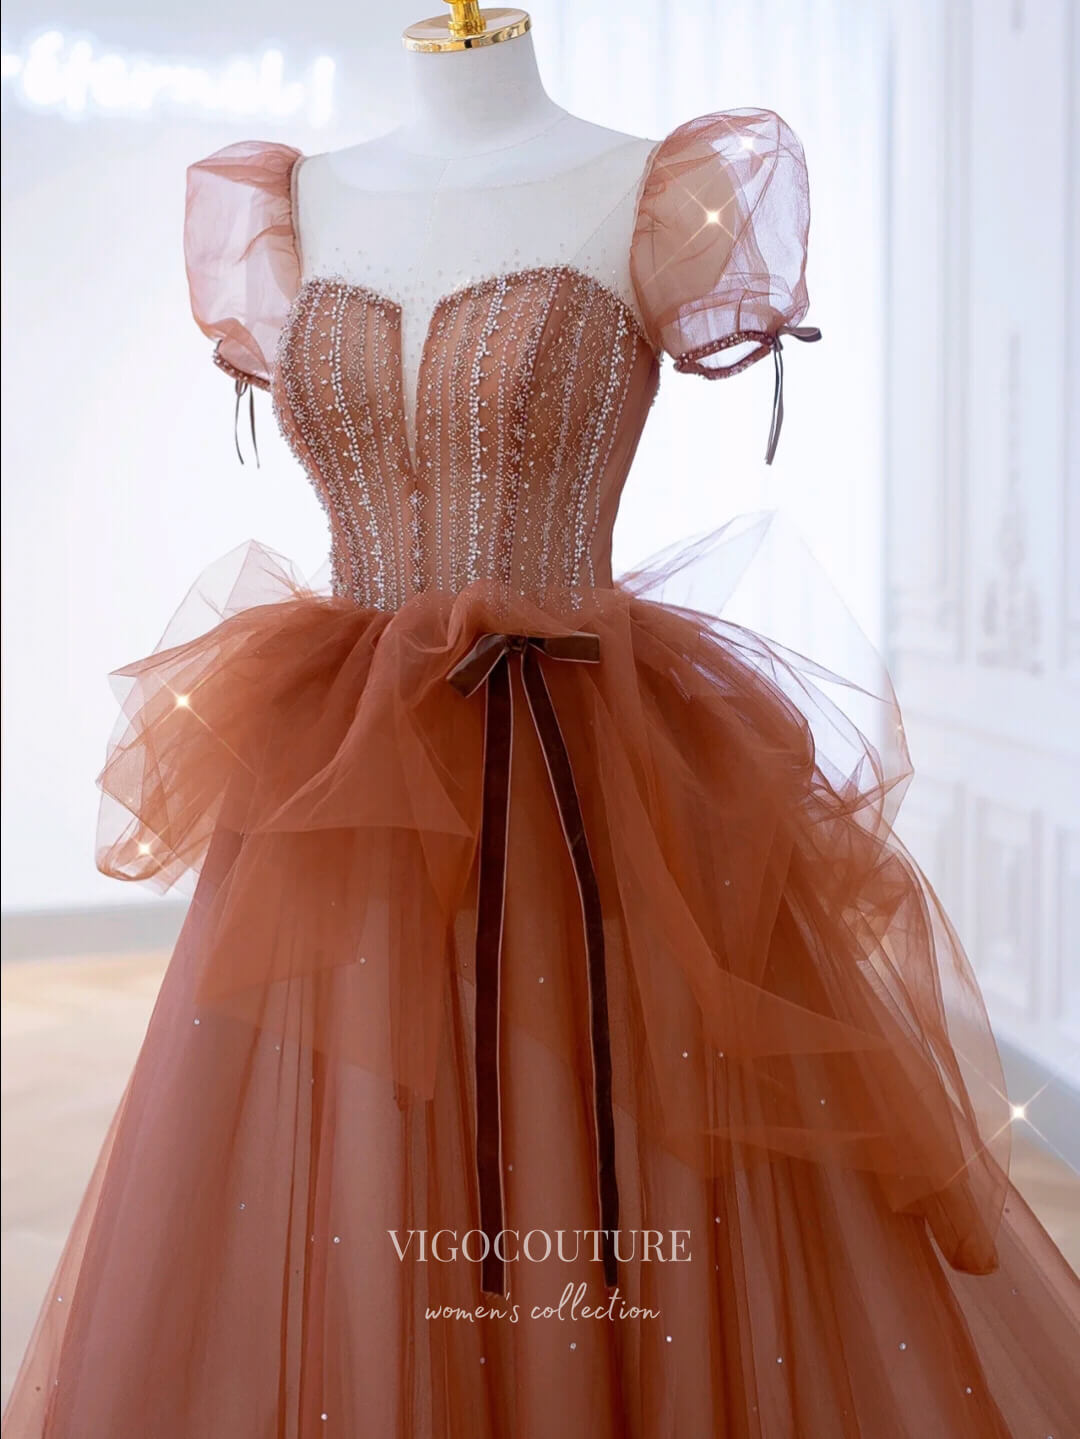 vigocouture-Brown Puffed Sleeve Prom Dresses Beaded Formal Dresses 21176-Prom Dresses-vigocouture-